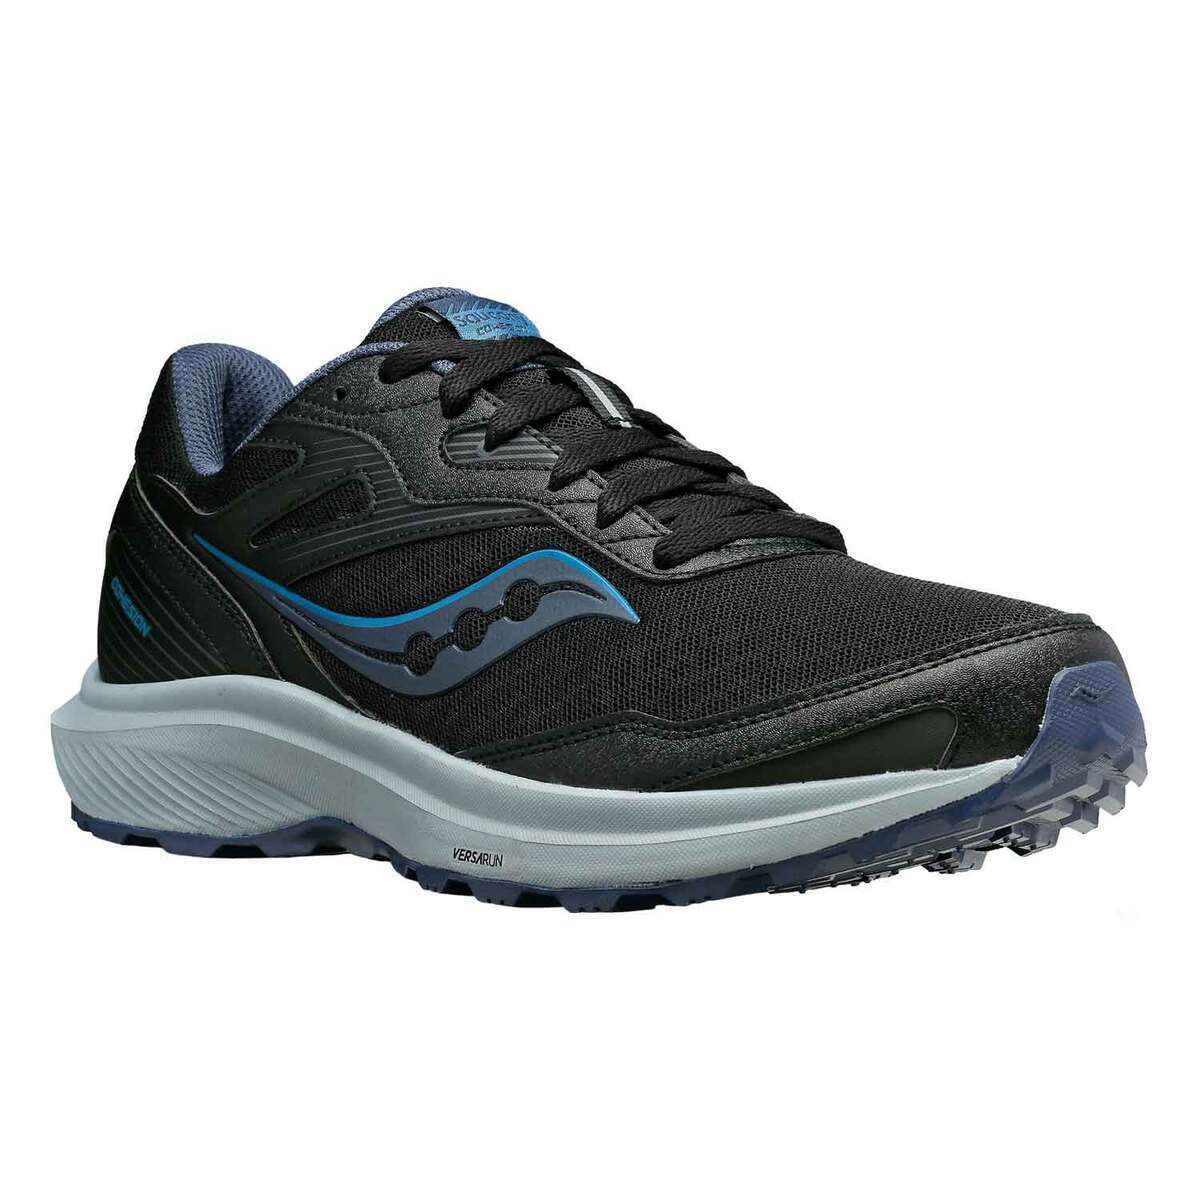 Saucony Men's Cohesion TR 16 Low Trail Running Shoes - Black/Mist ...